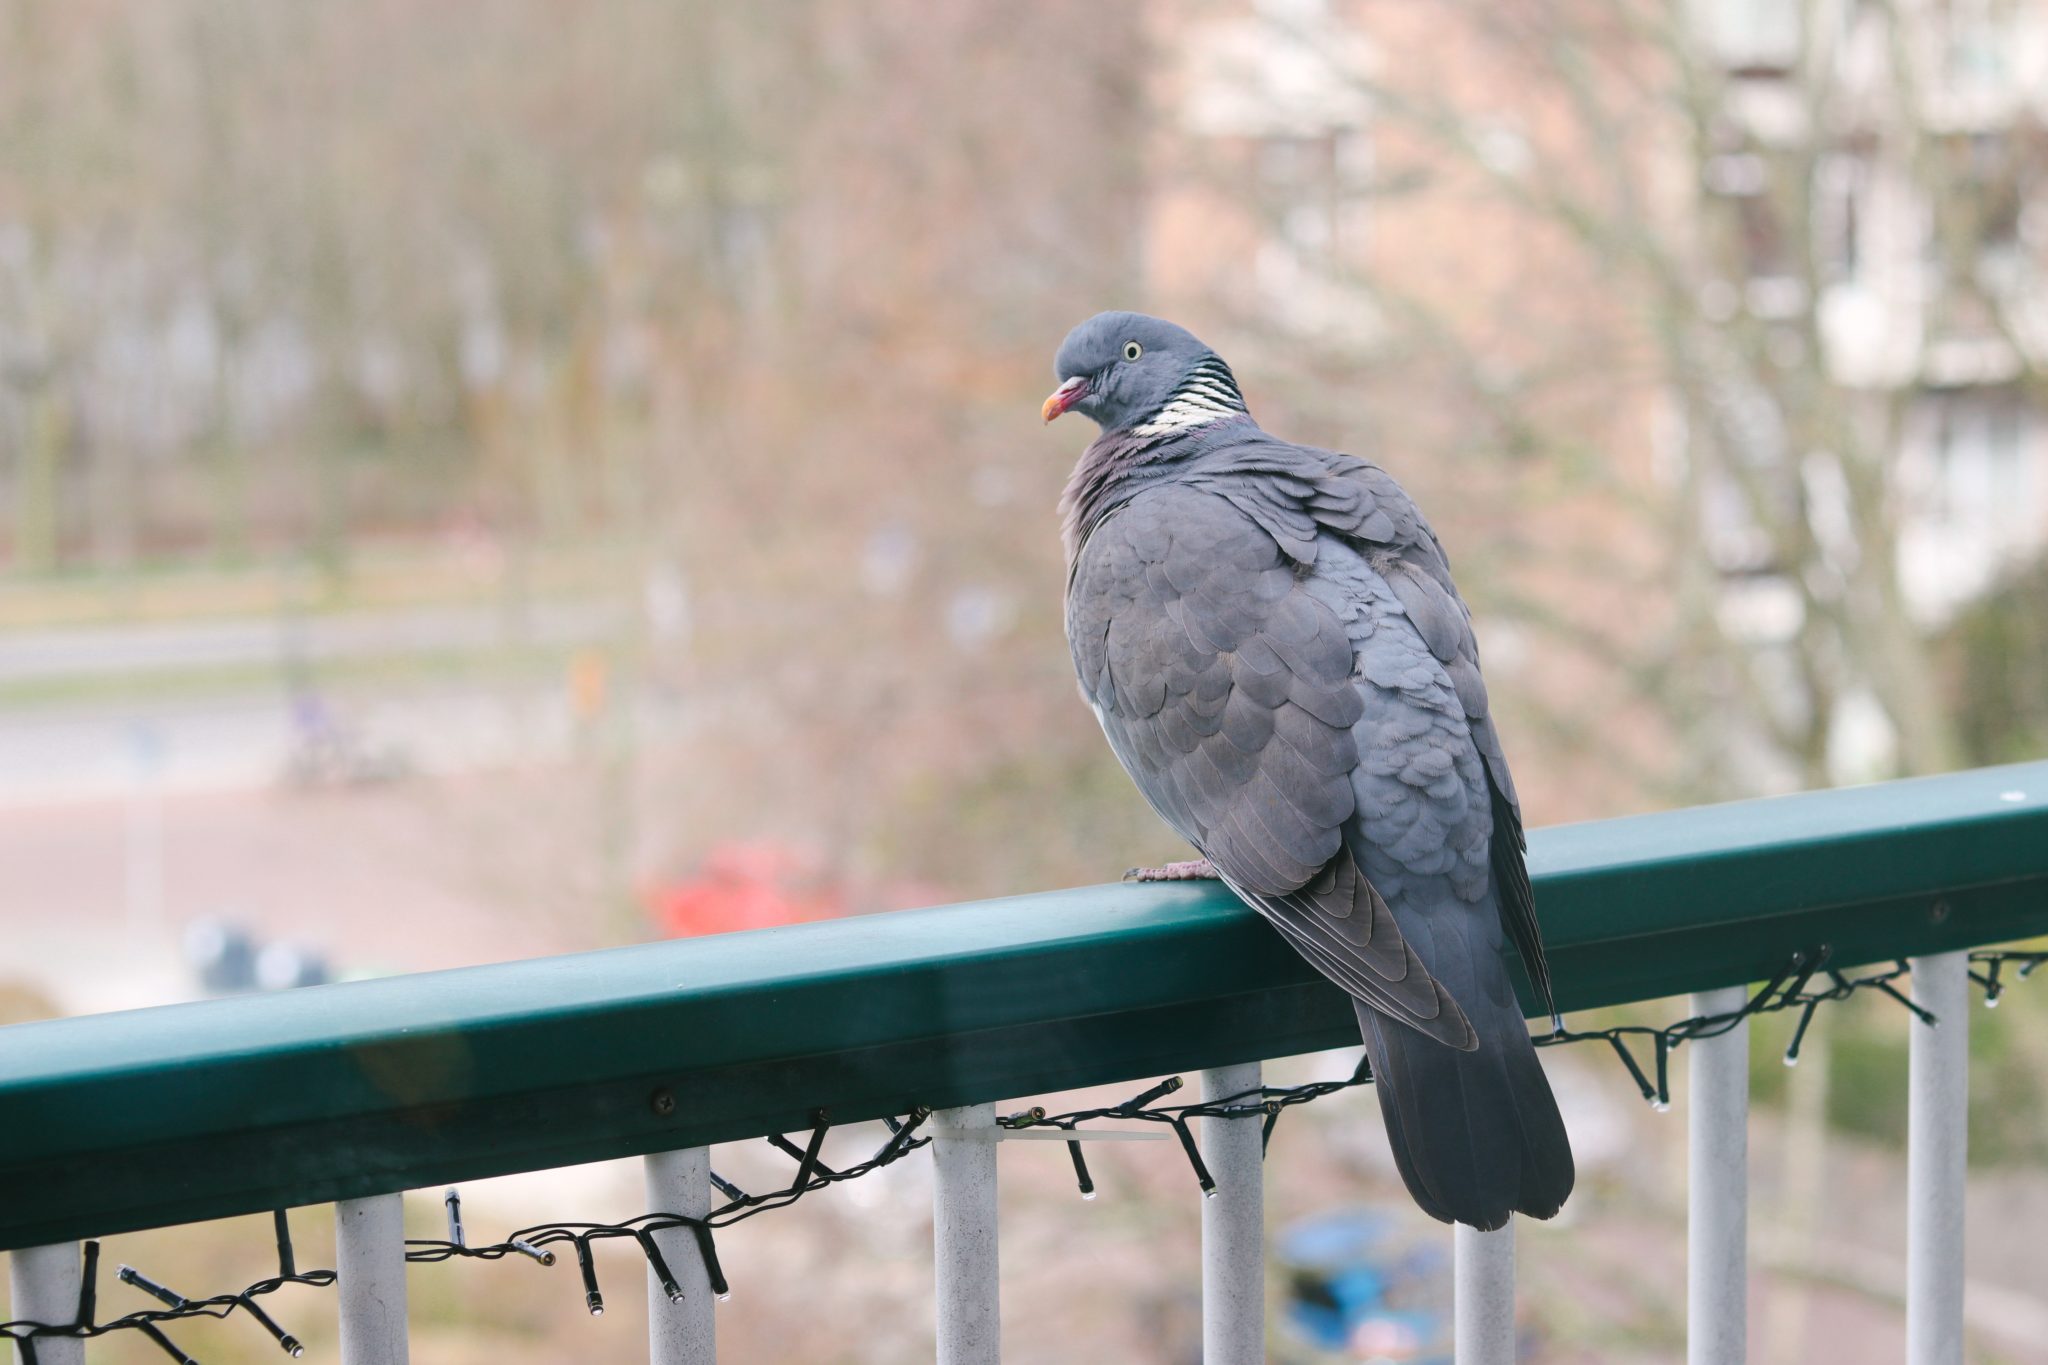 common-wood-pigeon-sitting-on-a-balcony-railing-2022-03-22-00-50-16-utc